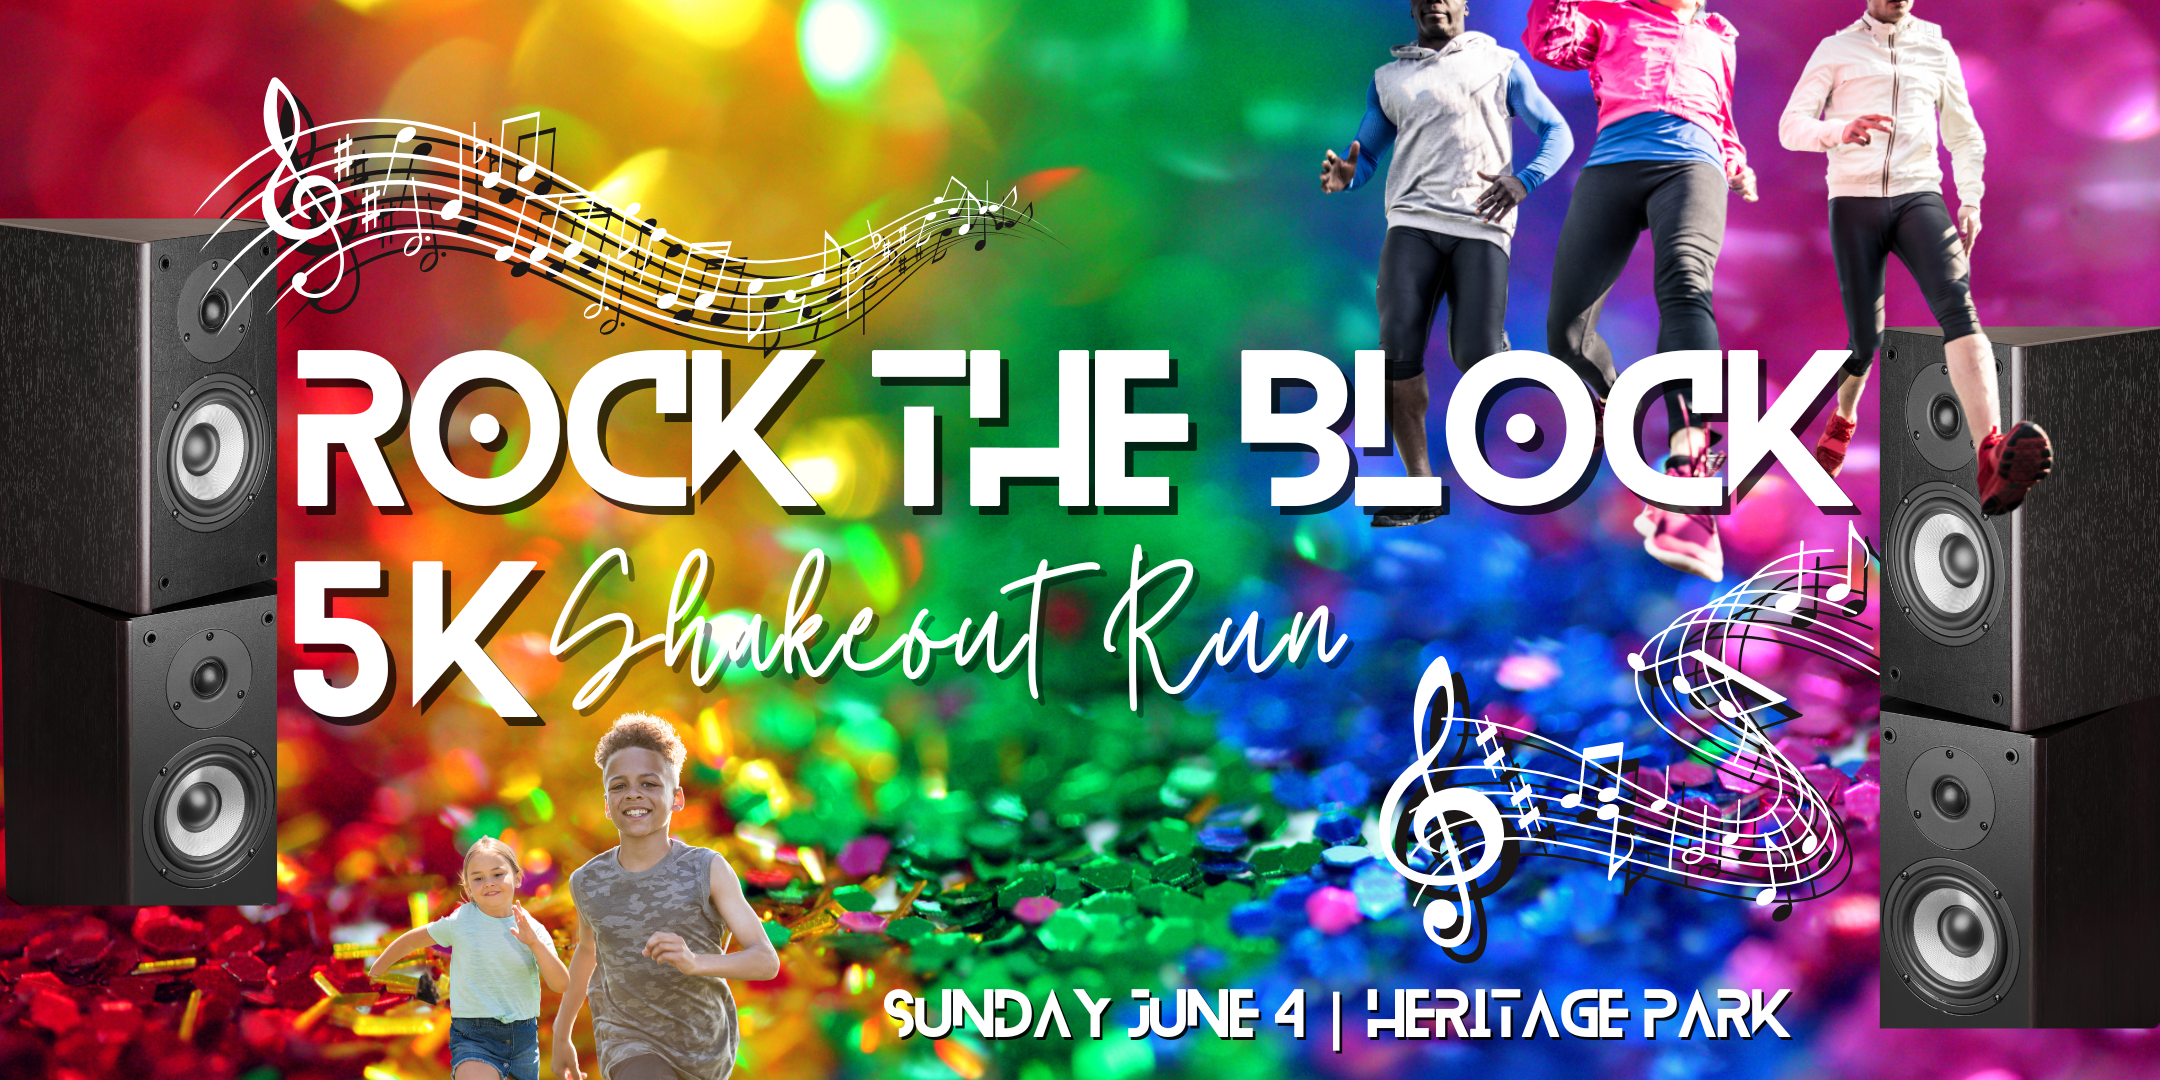 Rock the Block 5k Shakeout Run & Kids Fun Run